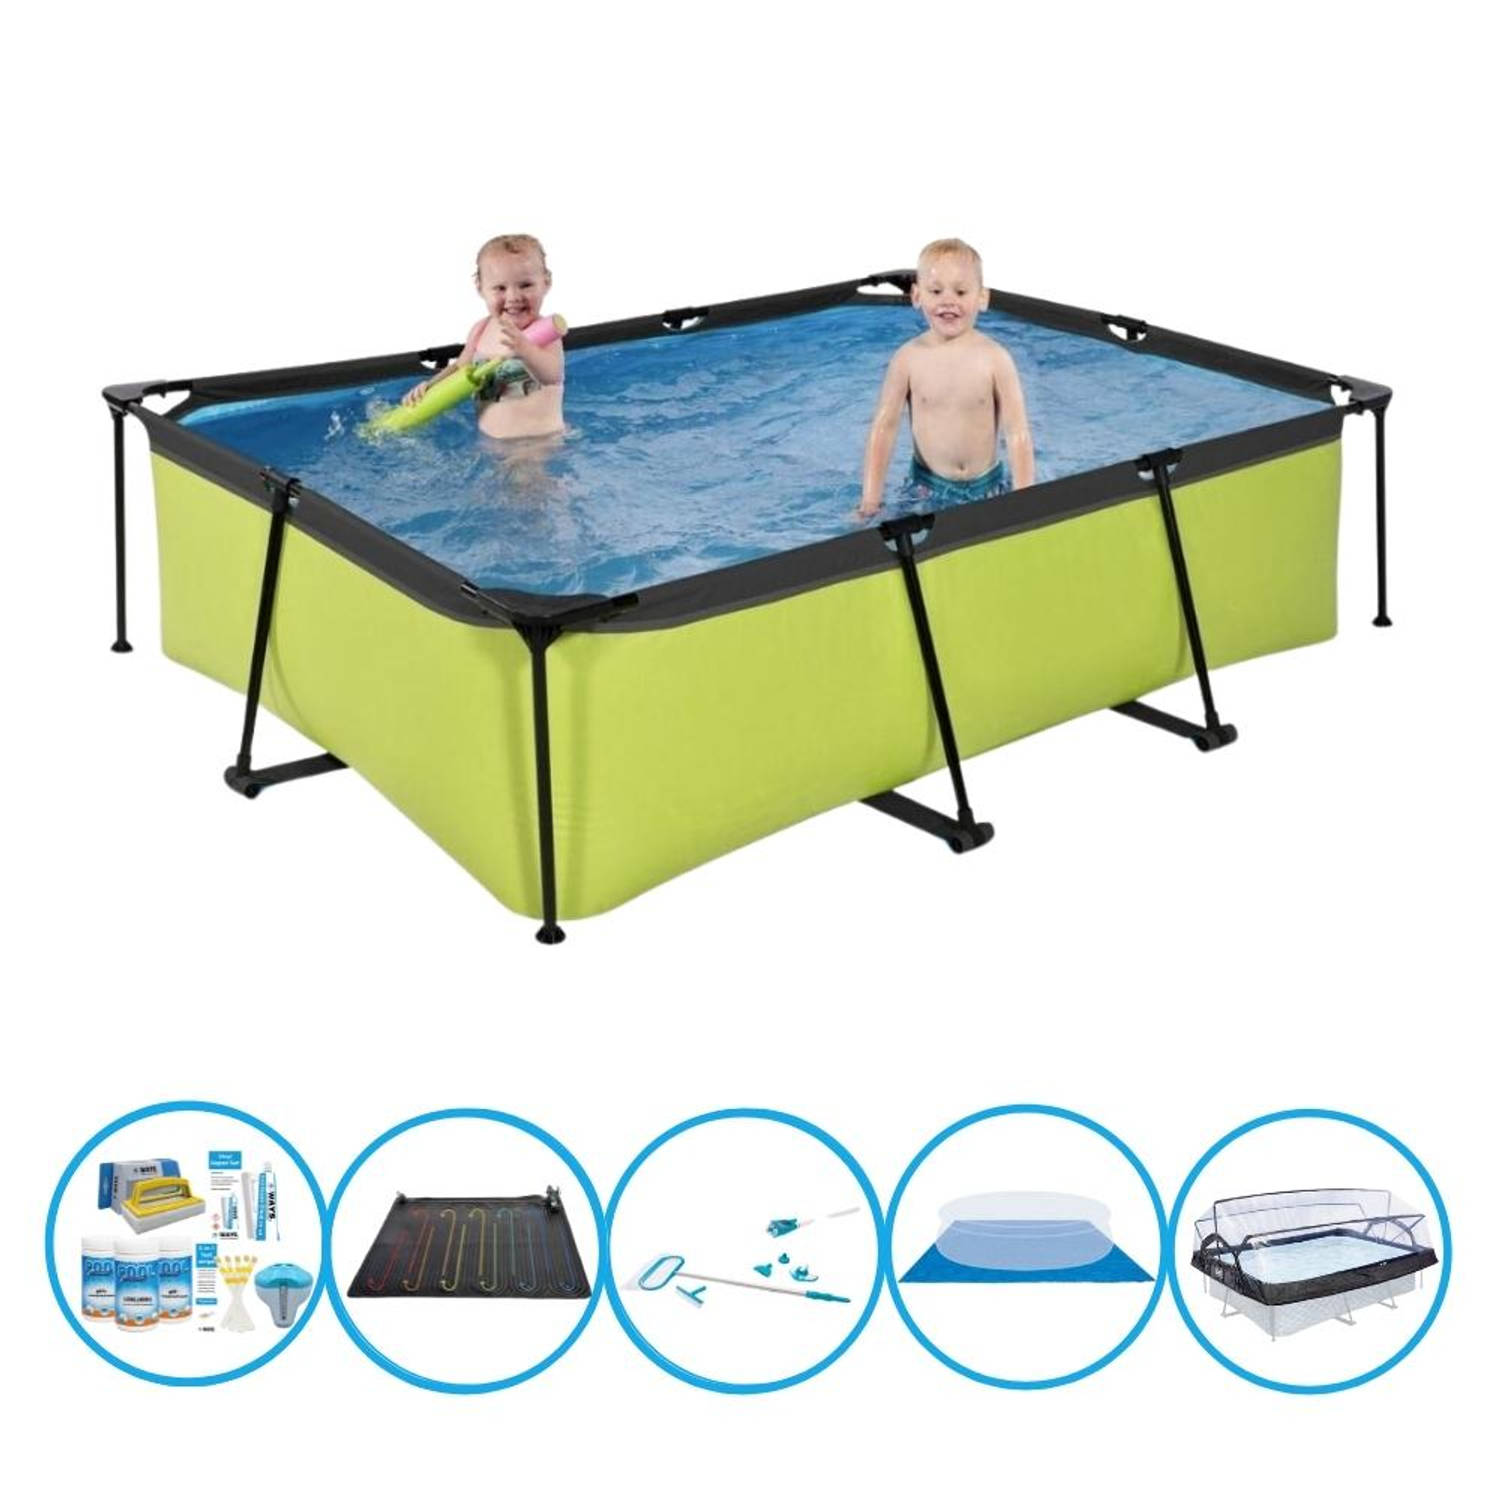 EXIT Zwembad Lime - 220x150x60 cm - Frame Pool - Inclusief bijbehorende accessoires